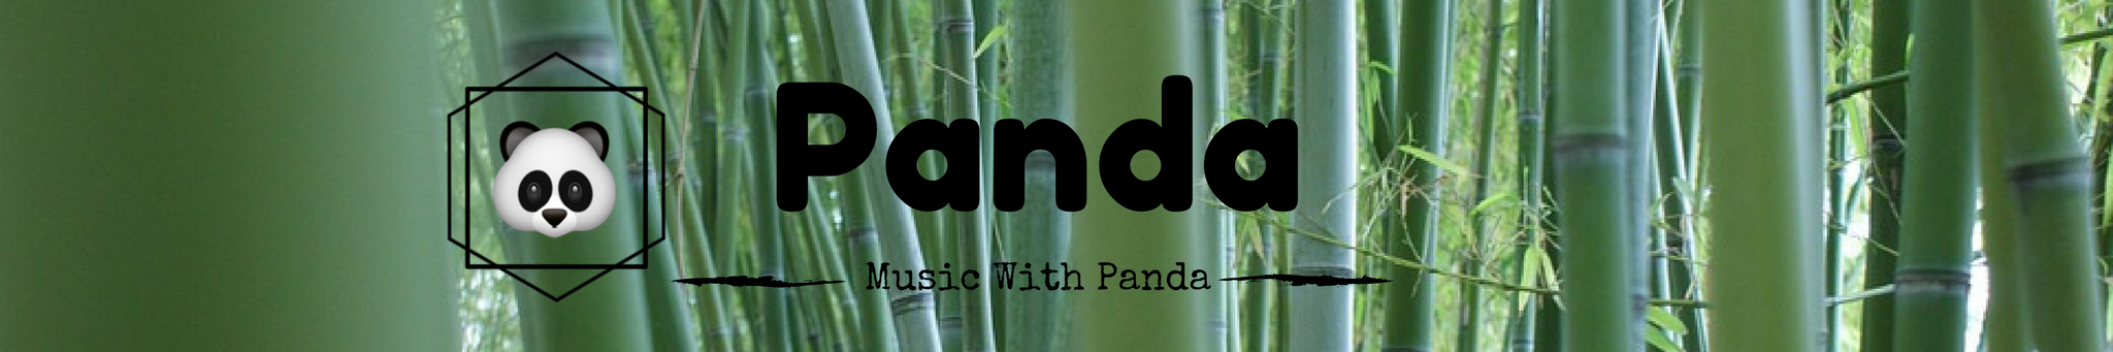 Music With Panda